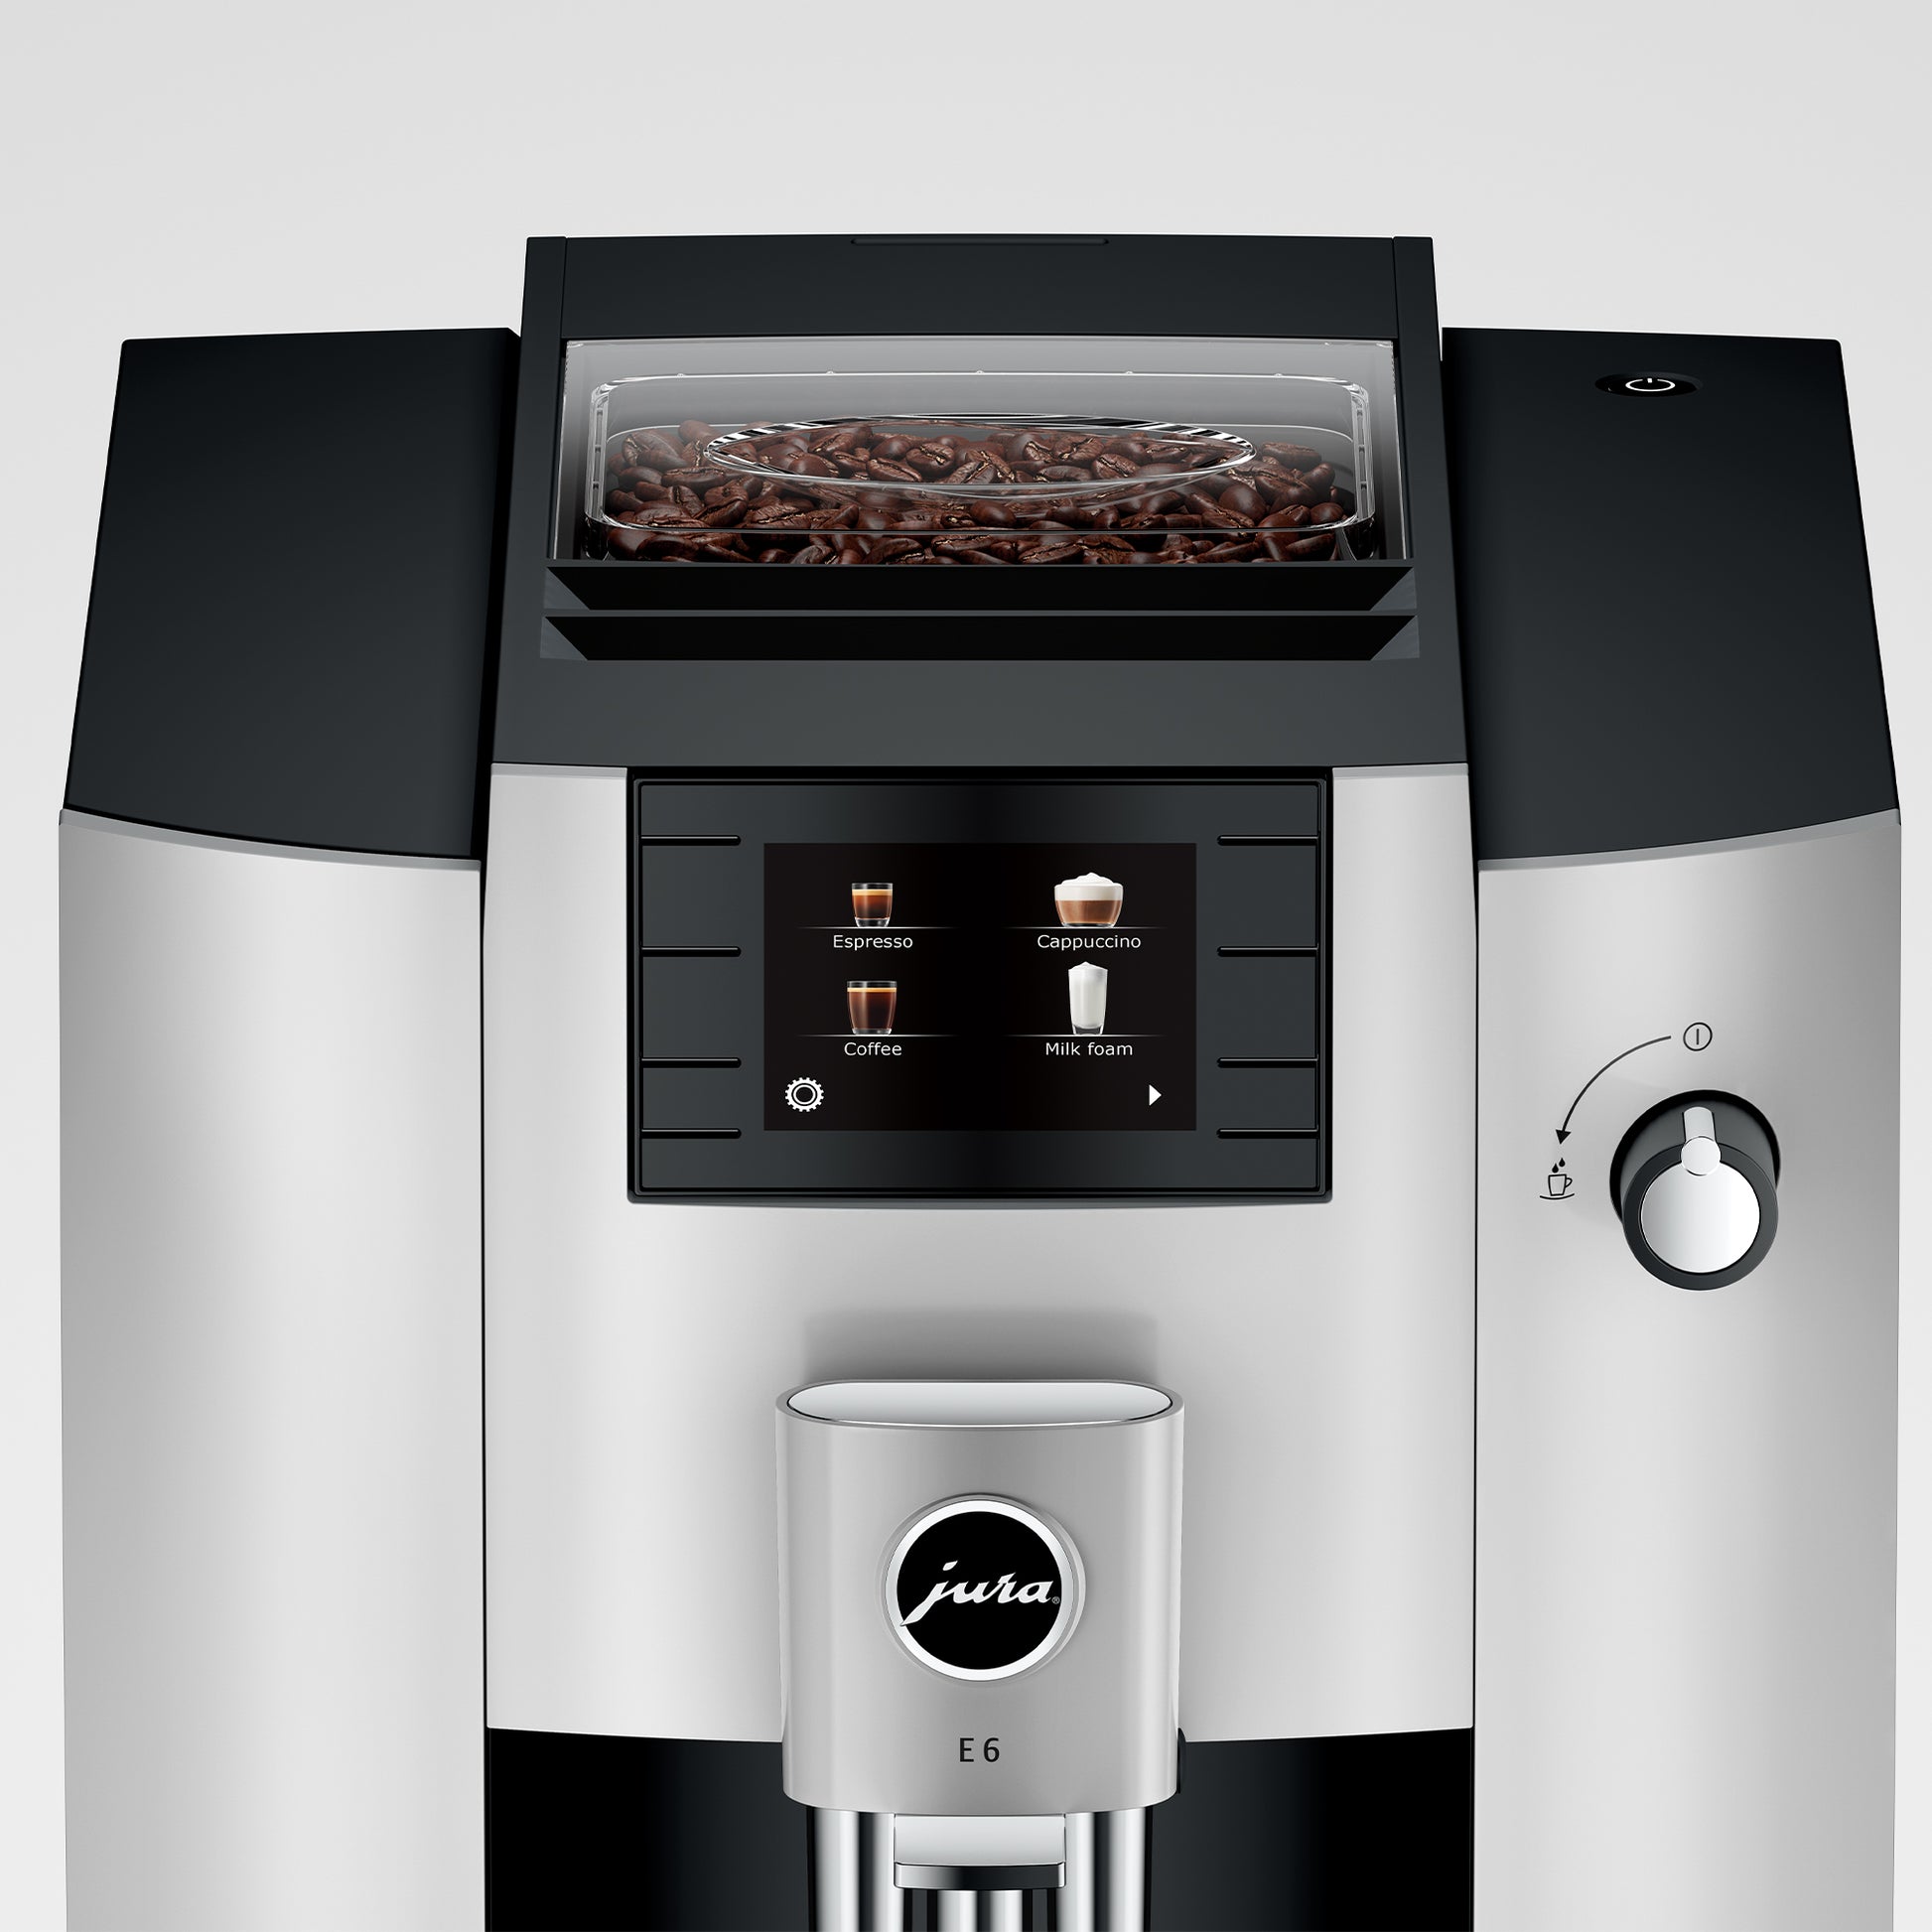 Best Latte Machine: Top 6 Latte Makers For A Whole Latte Love